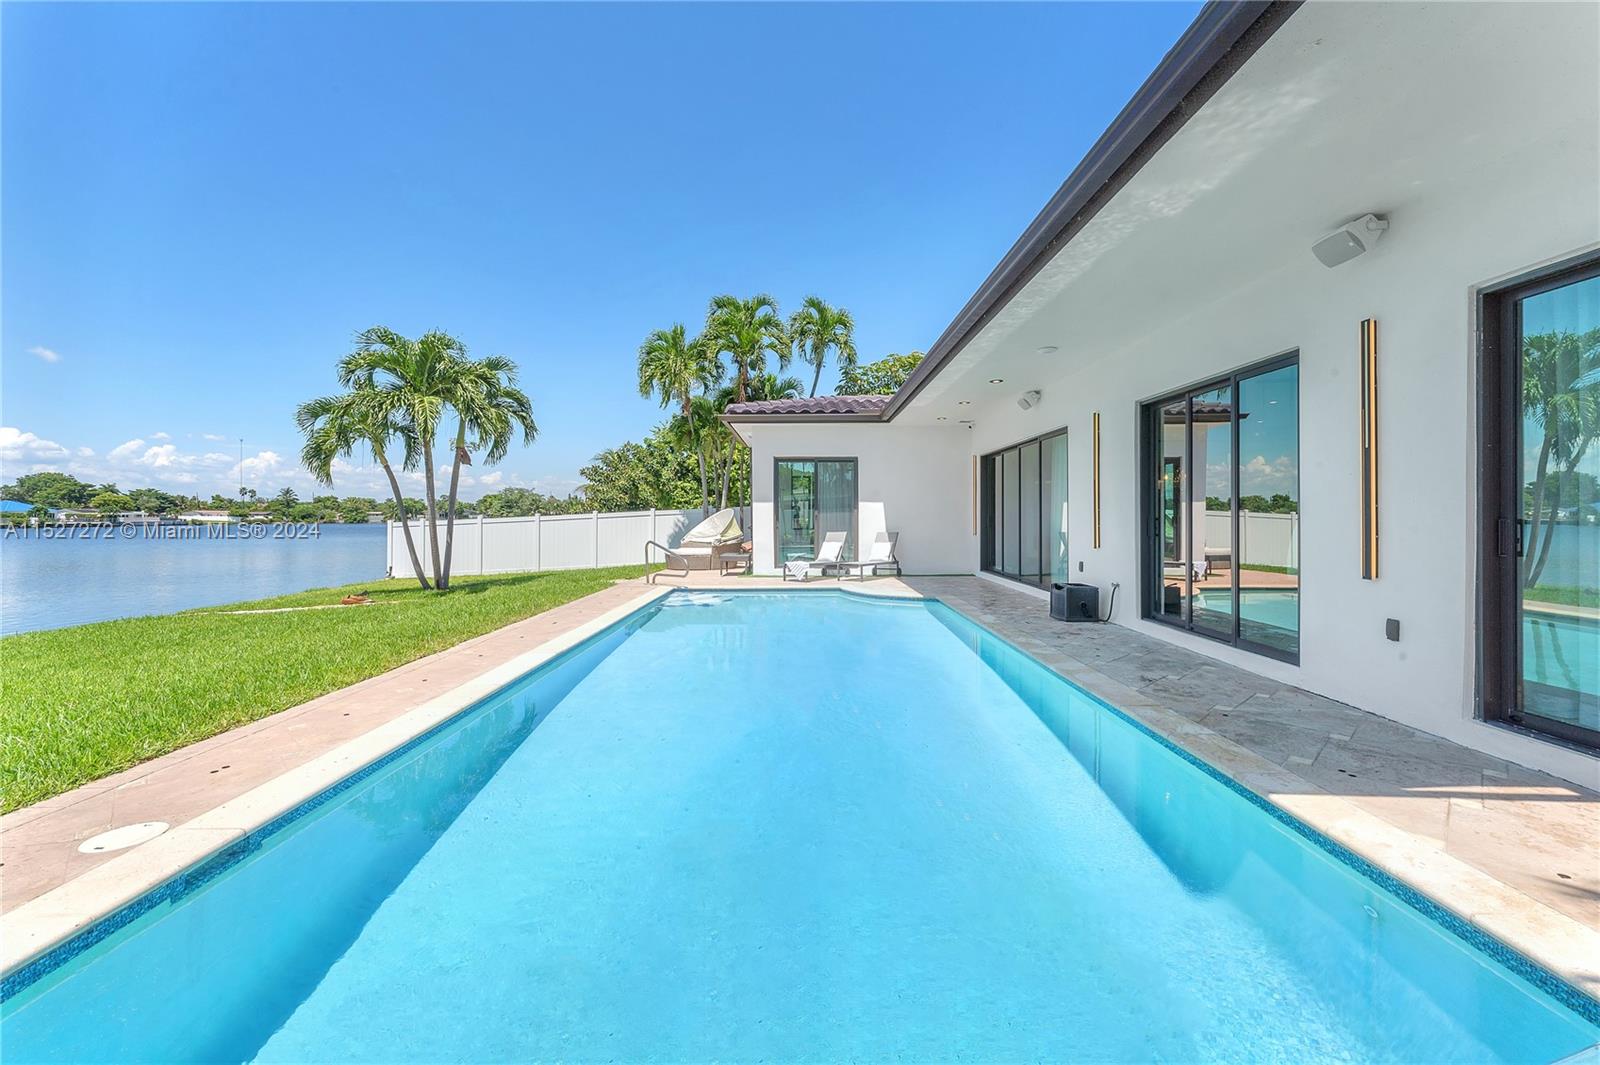 Property for Sale at 21100 Ne 25th Ct, Miami, Broward County, Florida - Bedrooms: 3 
Bathrooms: 4  - $3,200,000